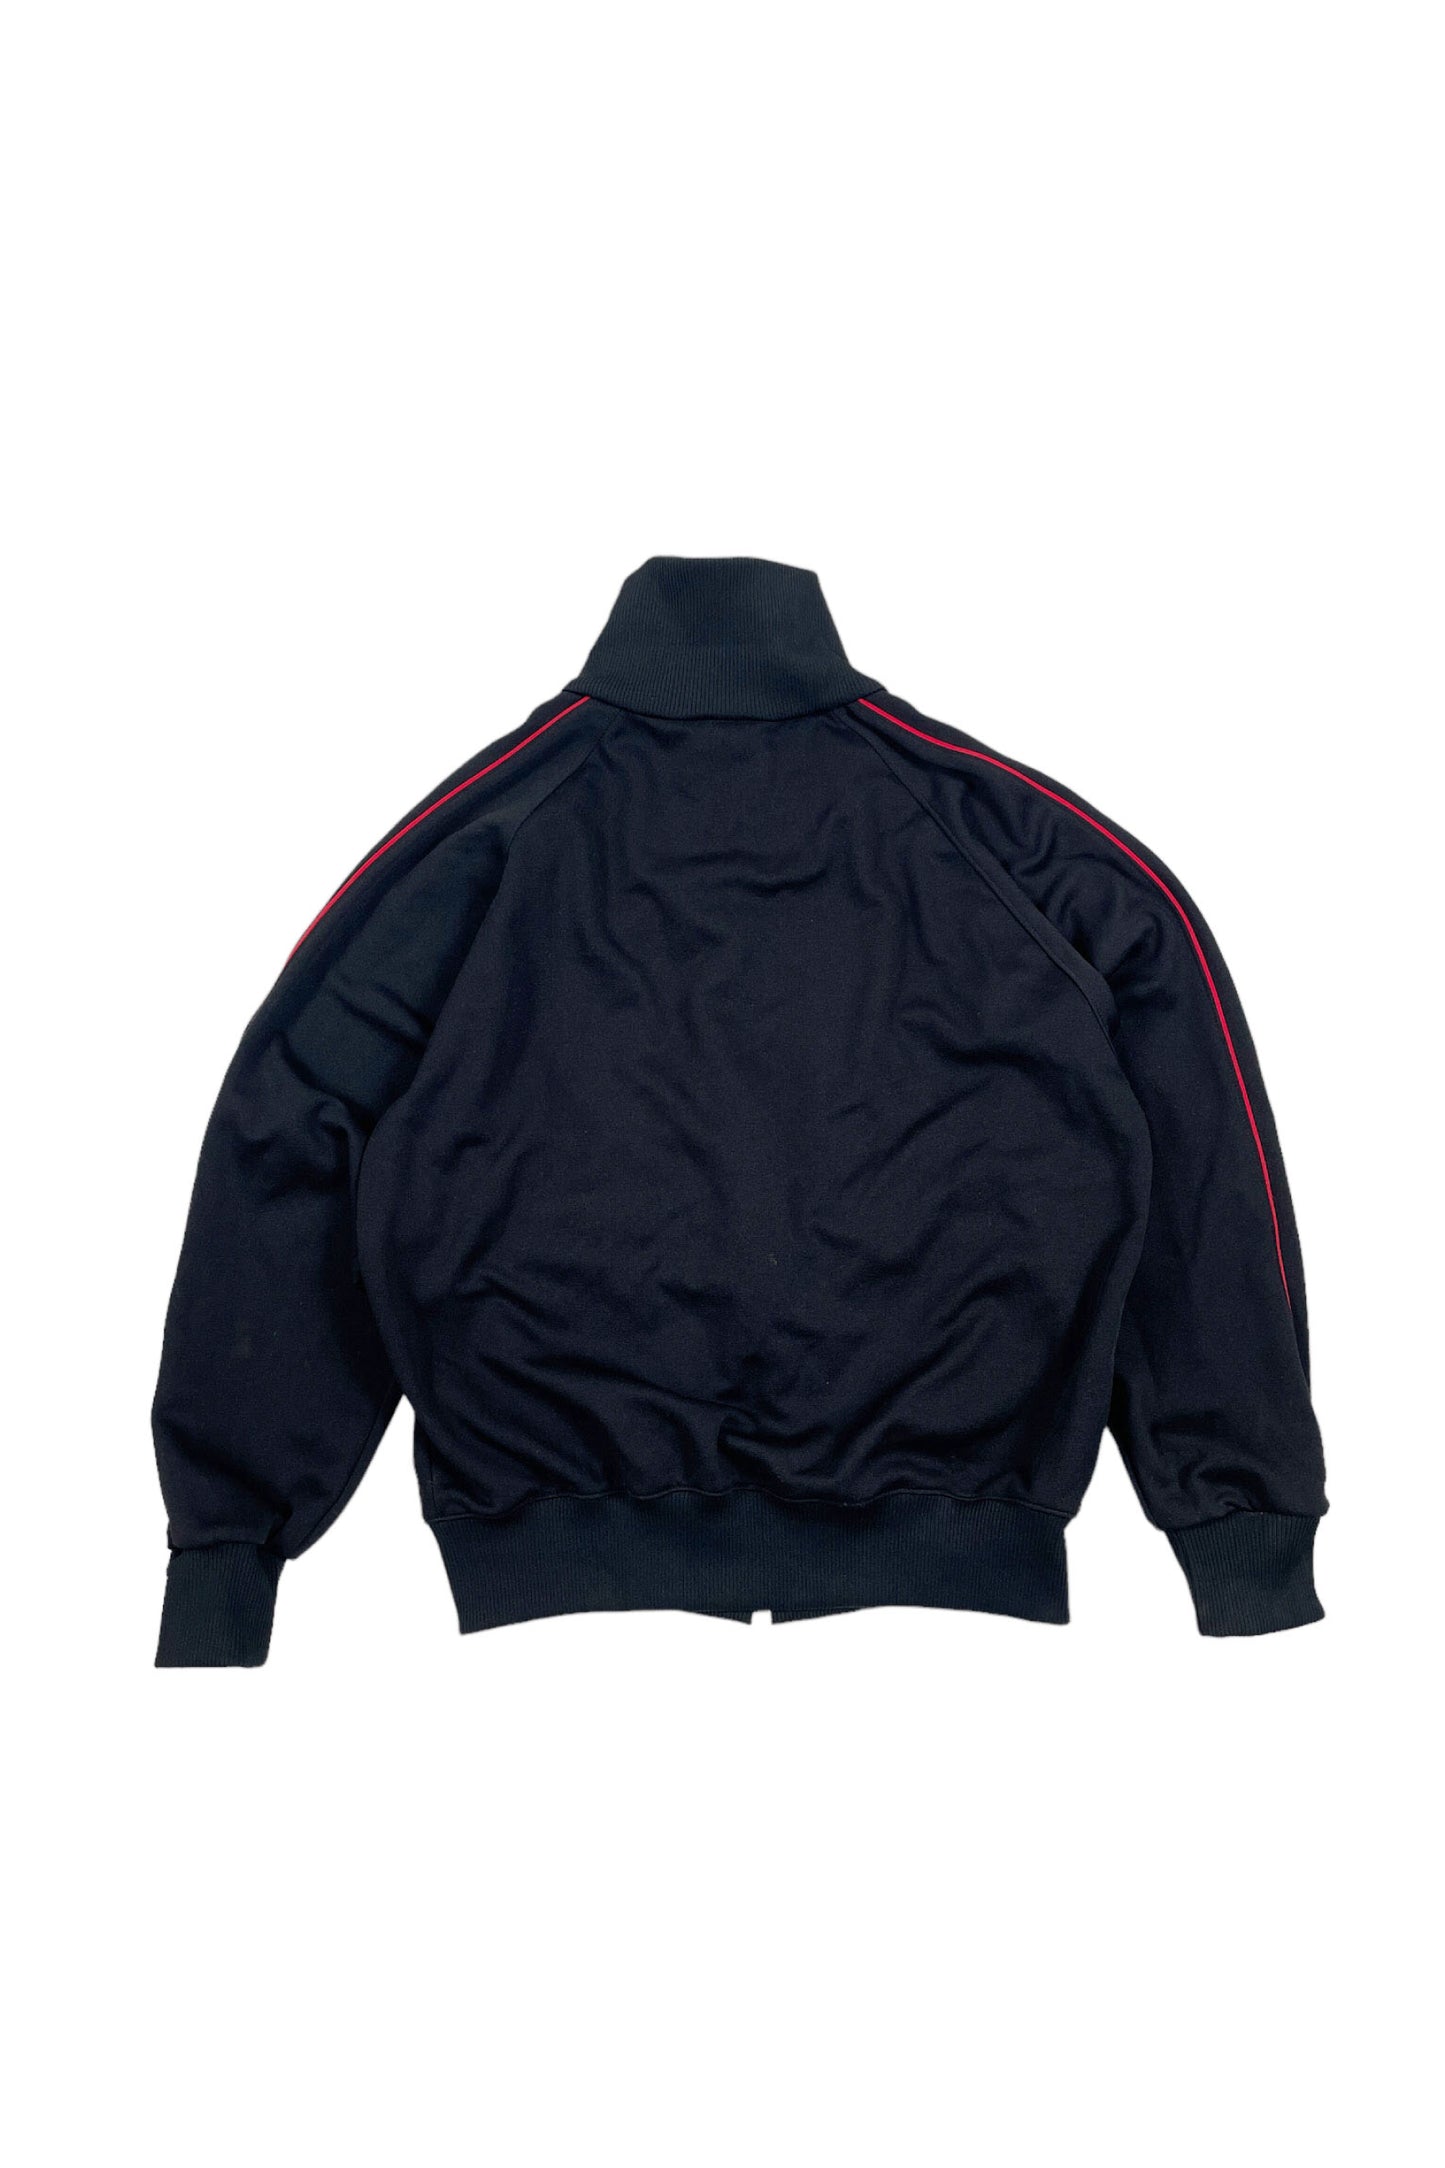 80's 90's PUMA track jacket